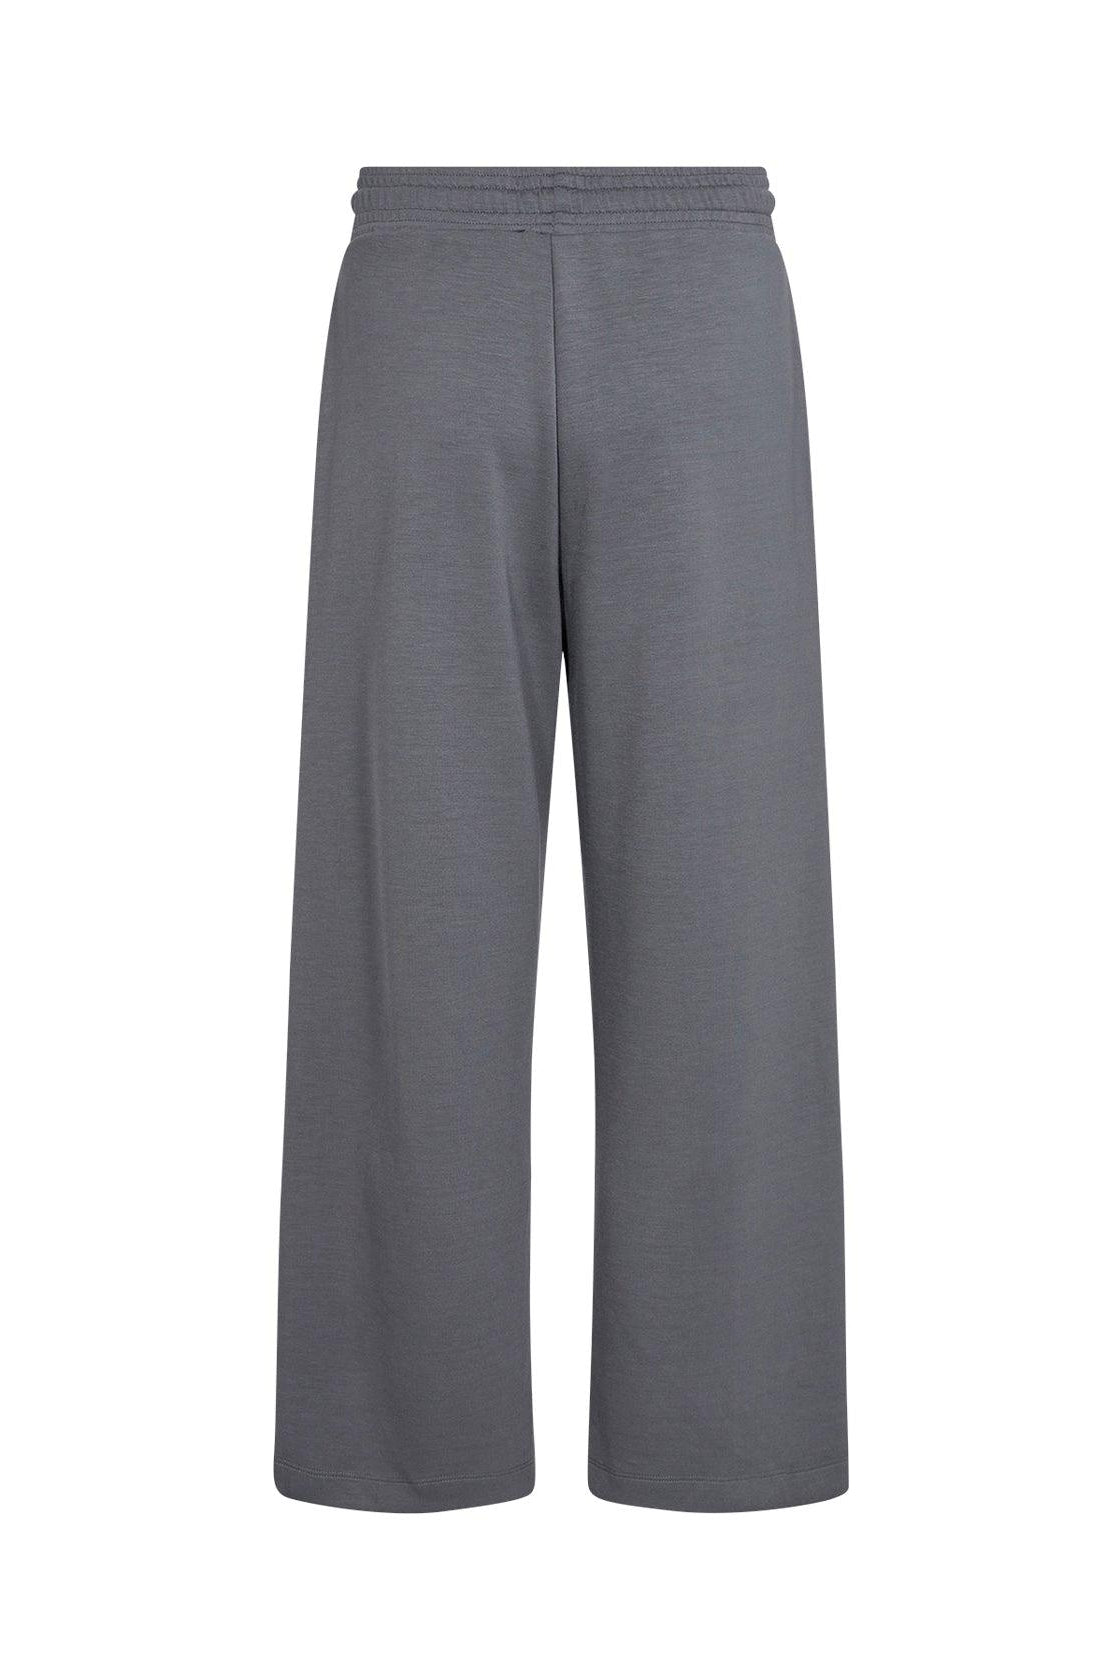 Grey Lounge Pants - Fox Trot Boutique